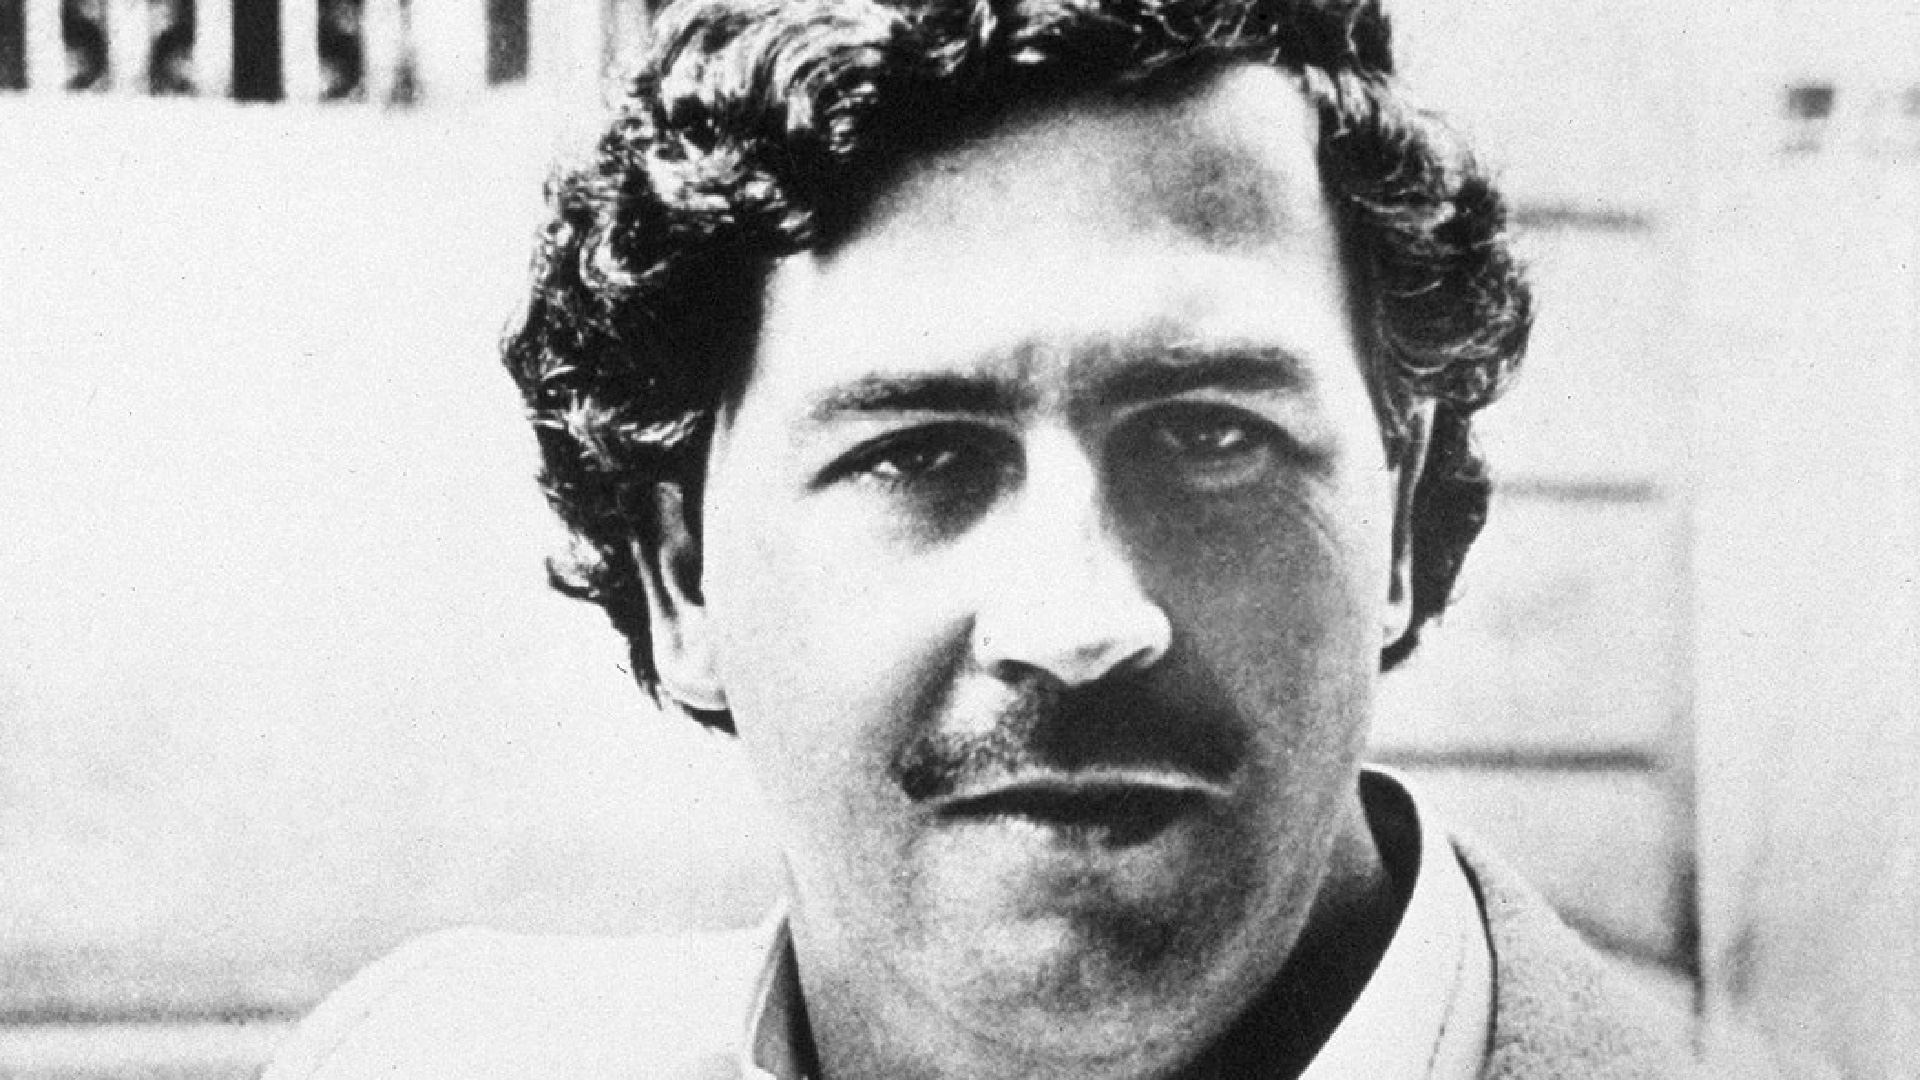 Escobar - Killing Escobar | Documental en RTVE